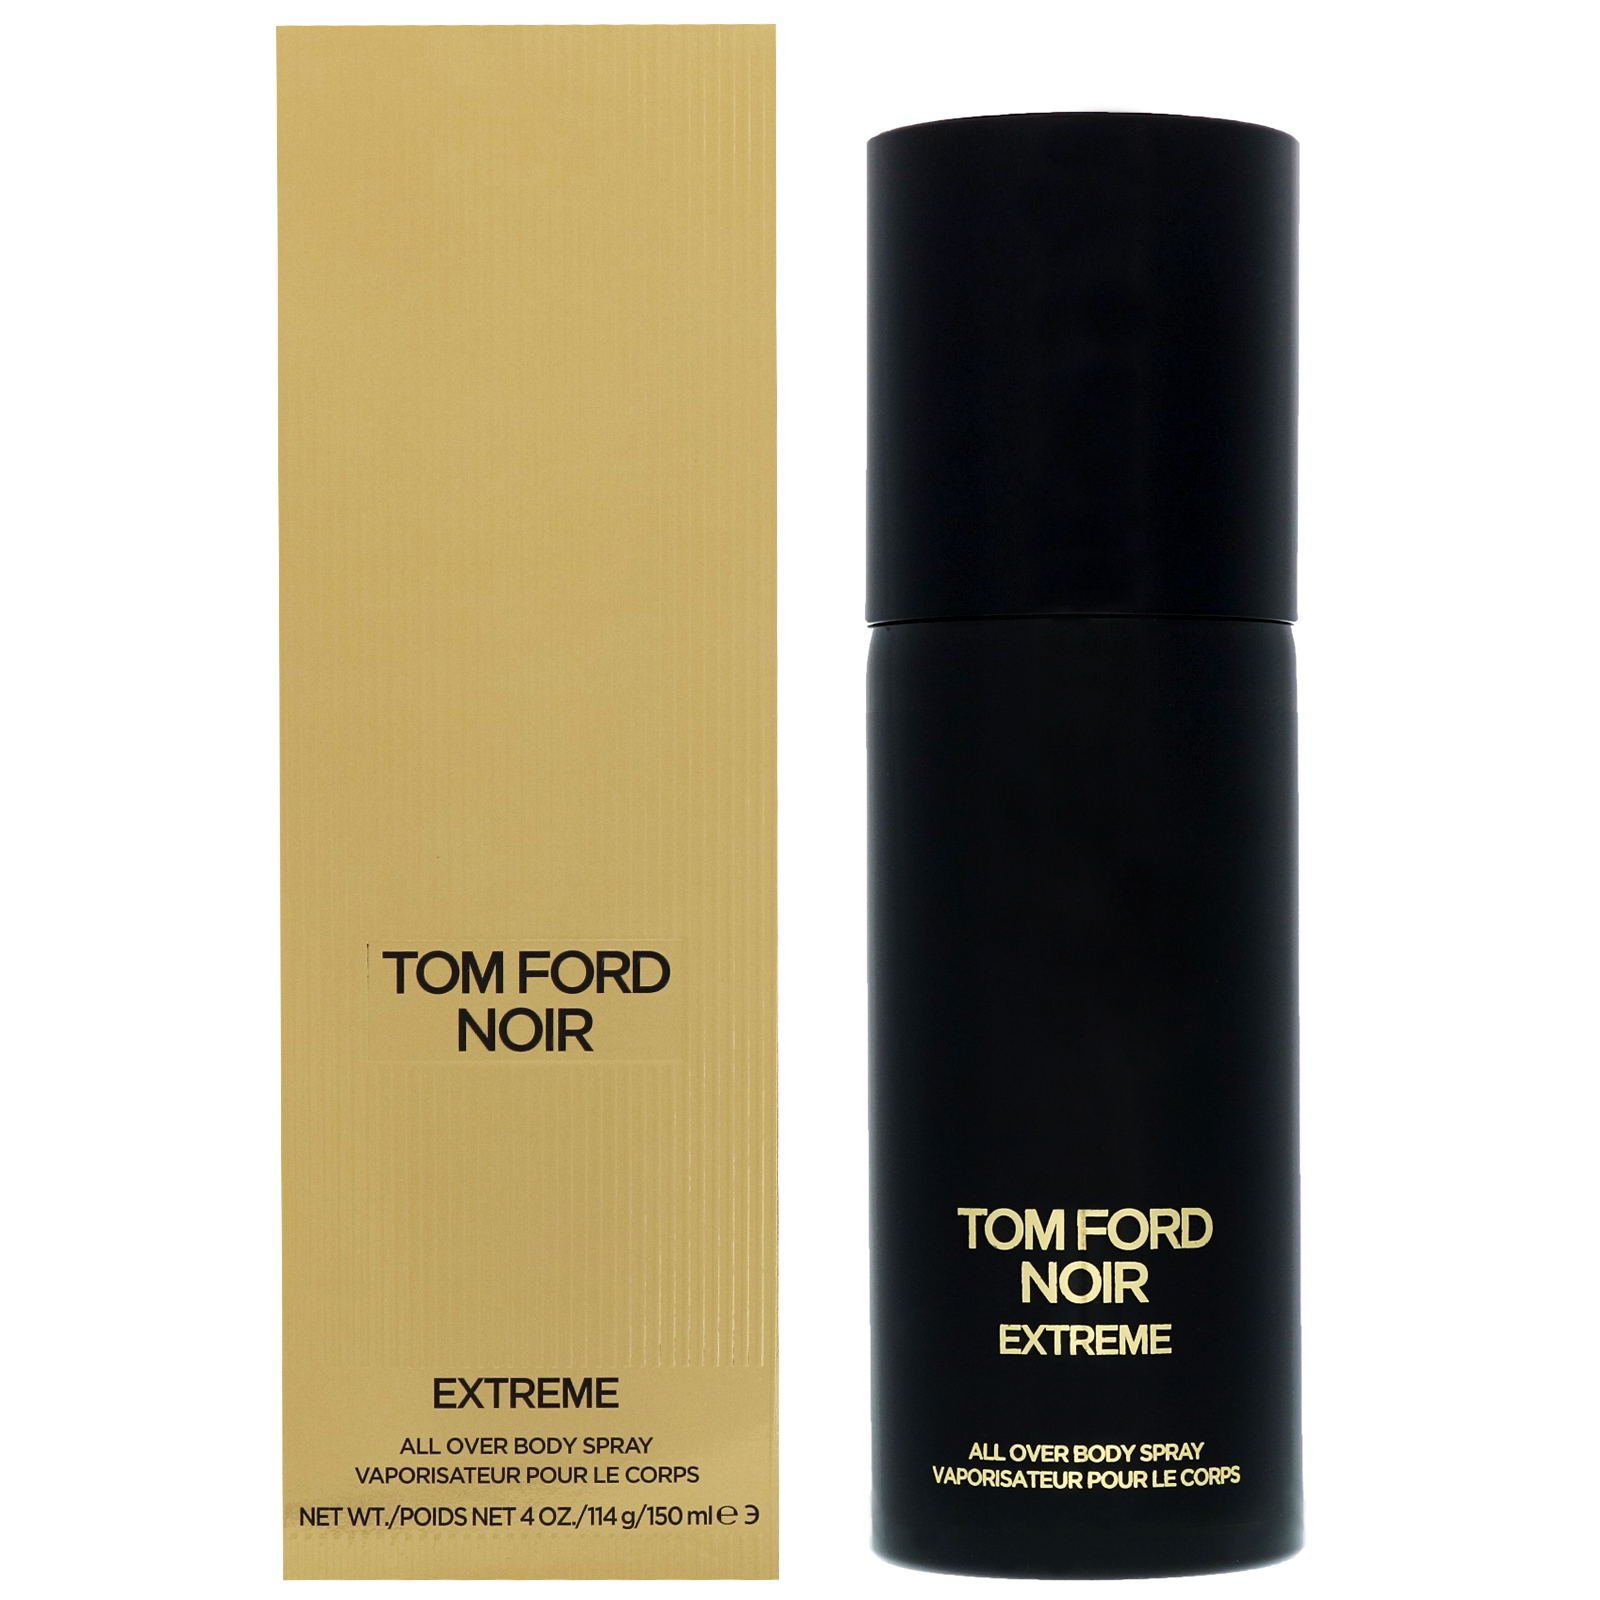 Tom Ford Noir Extreme All Over Body Spray | Fehily’s